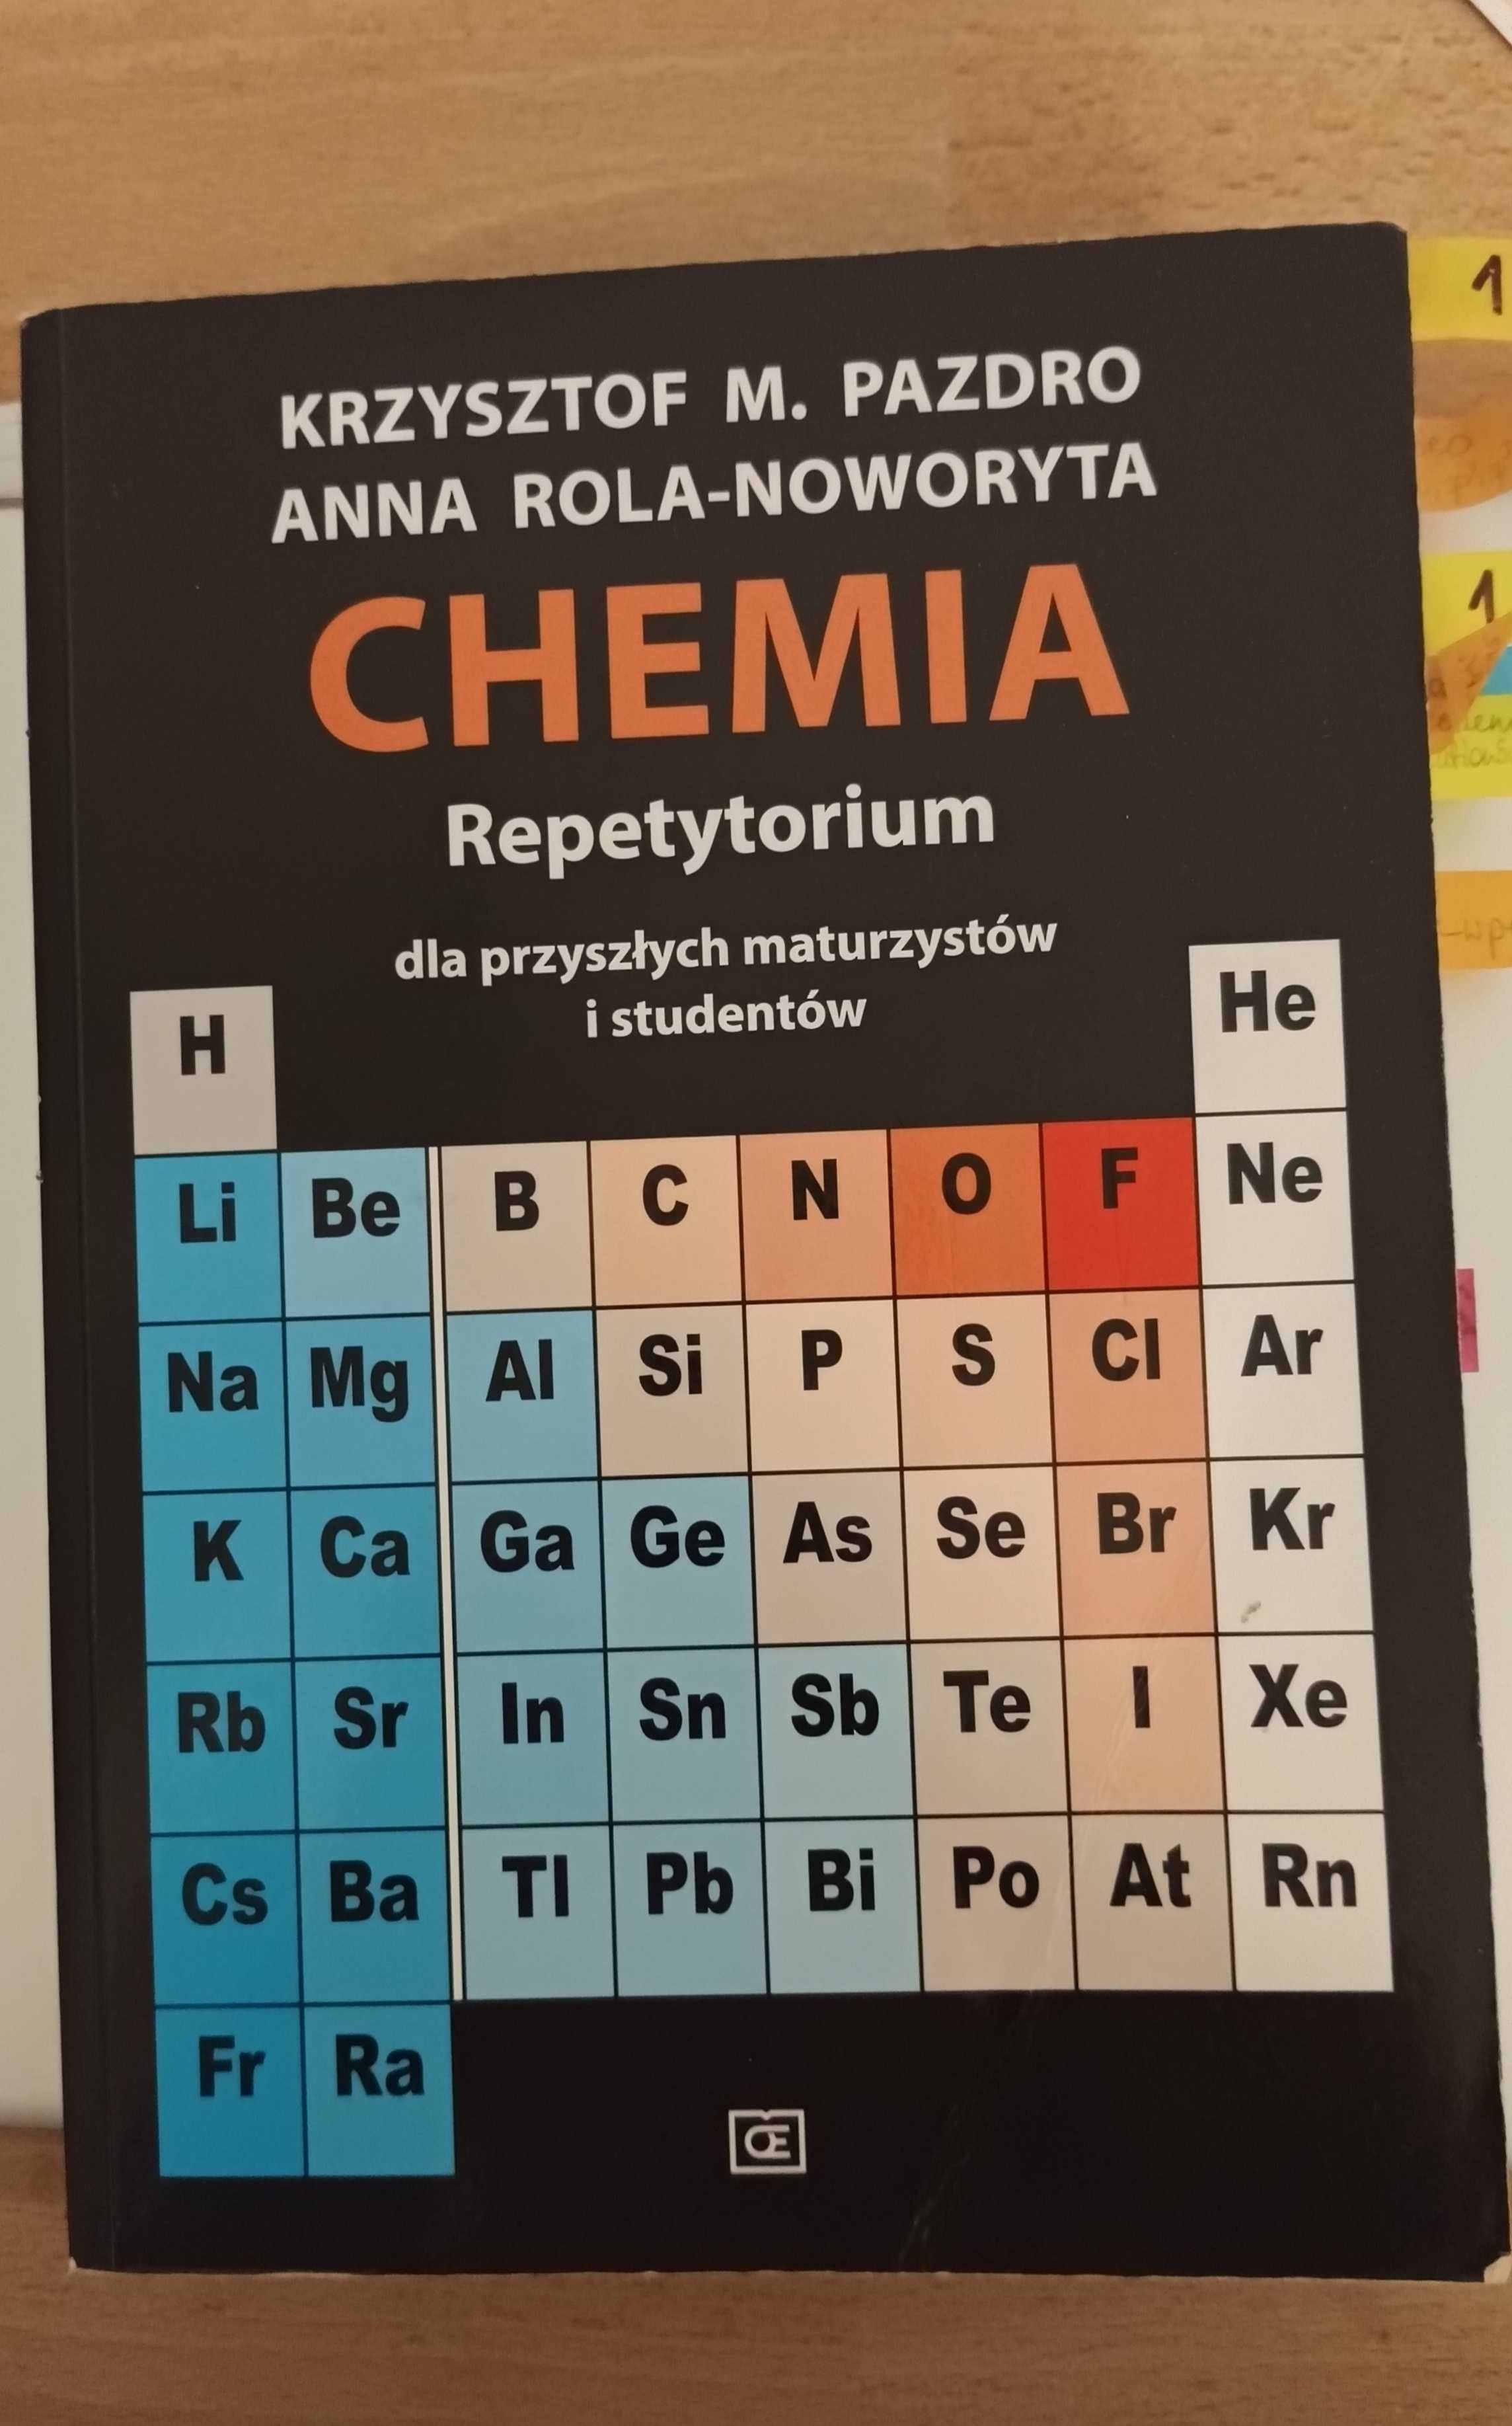 Chemia repetytorium Pazdro Rola-Noworyta